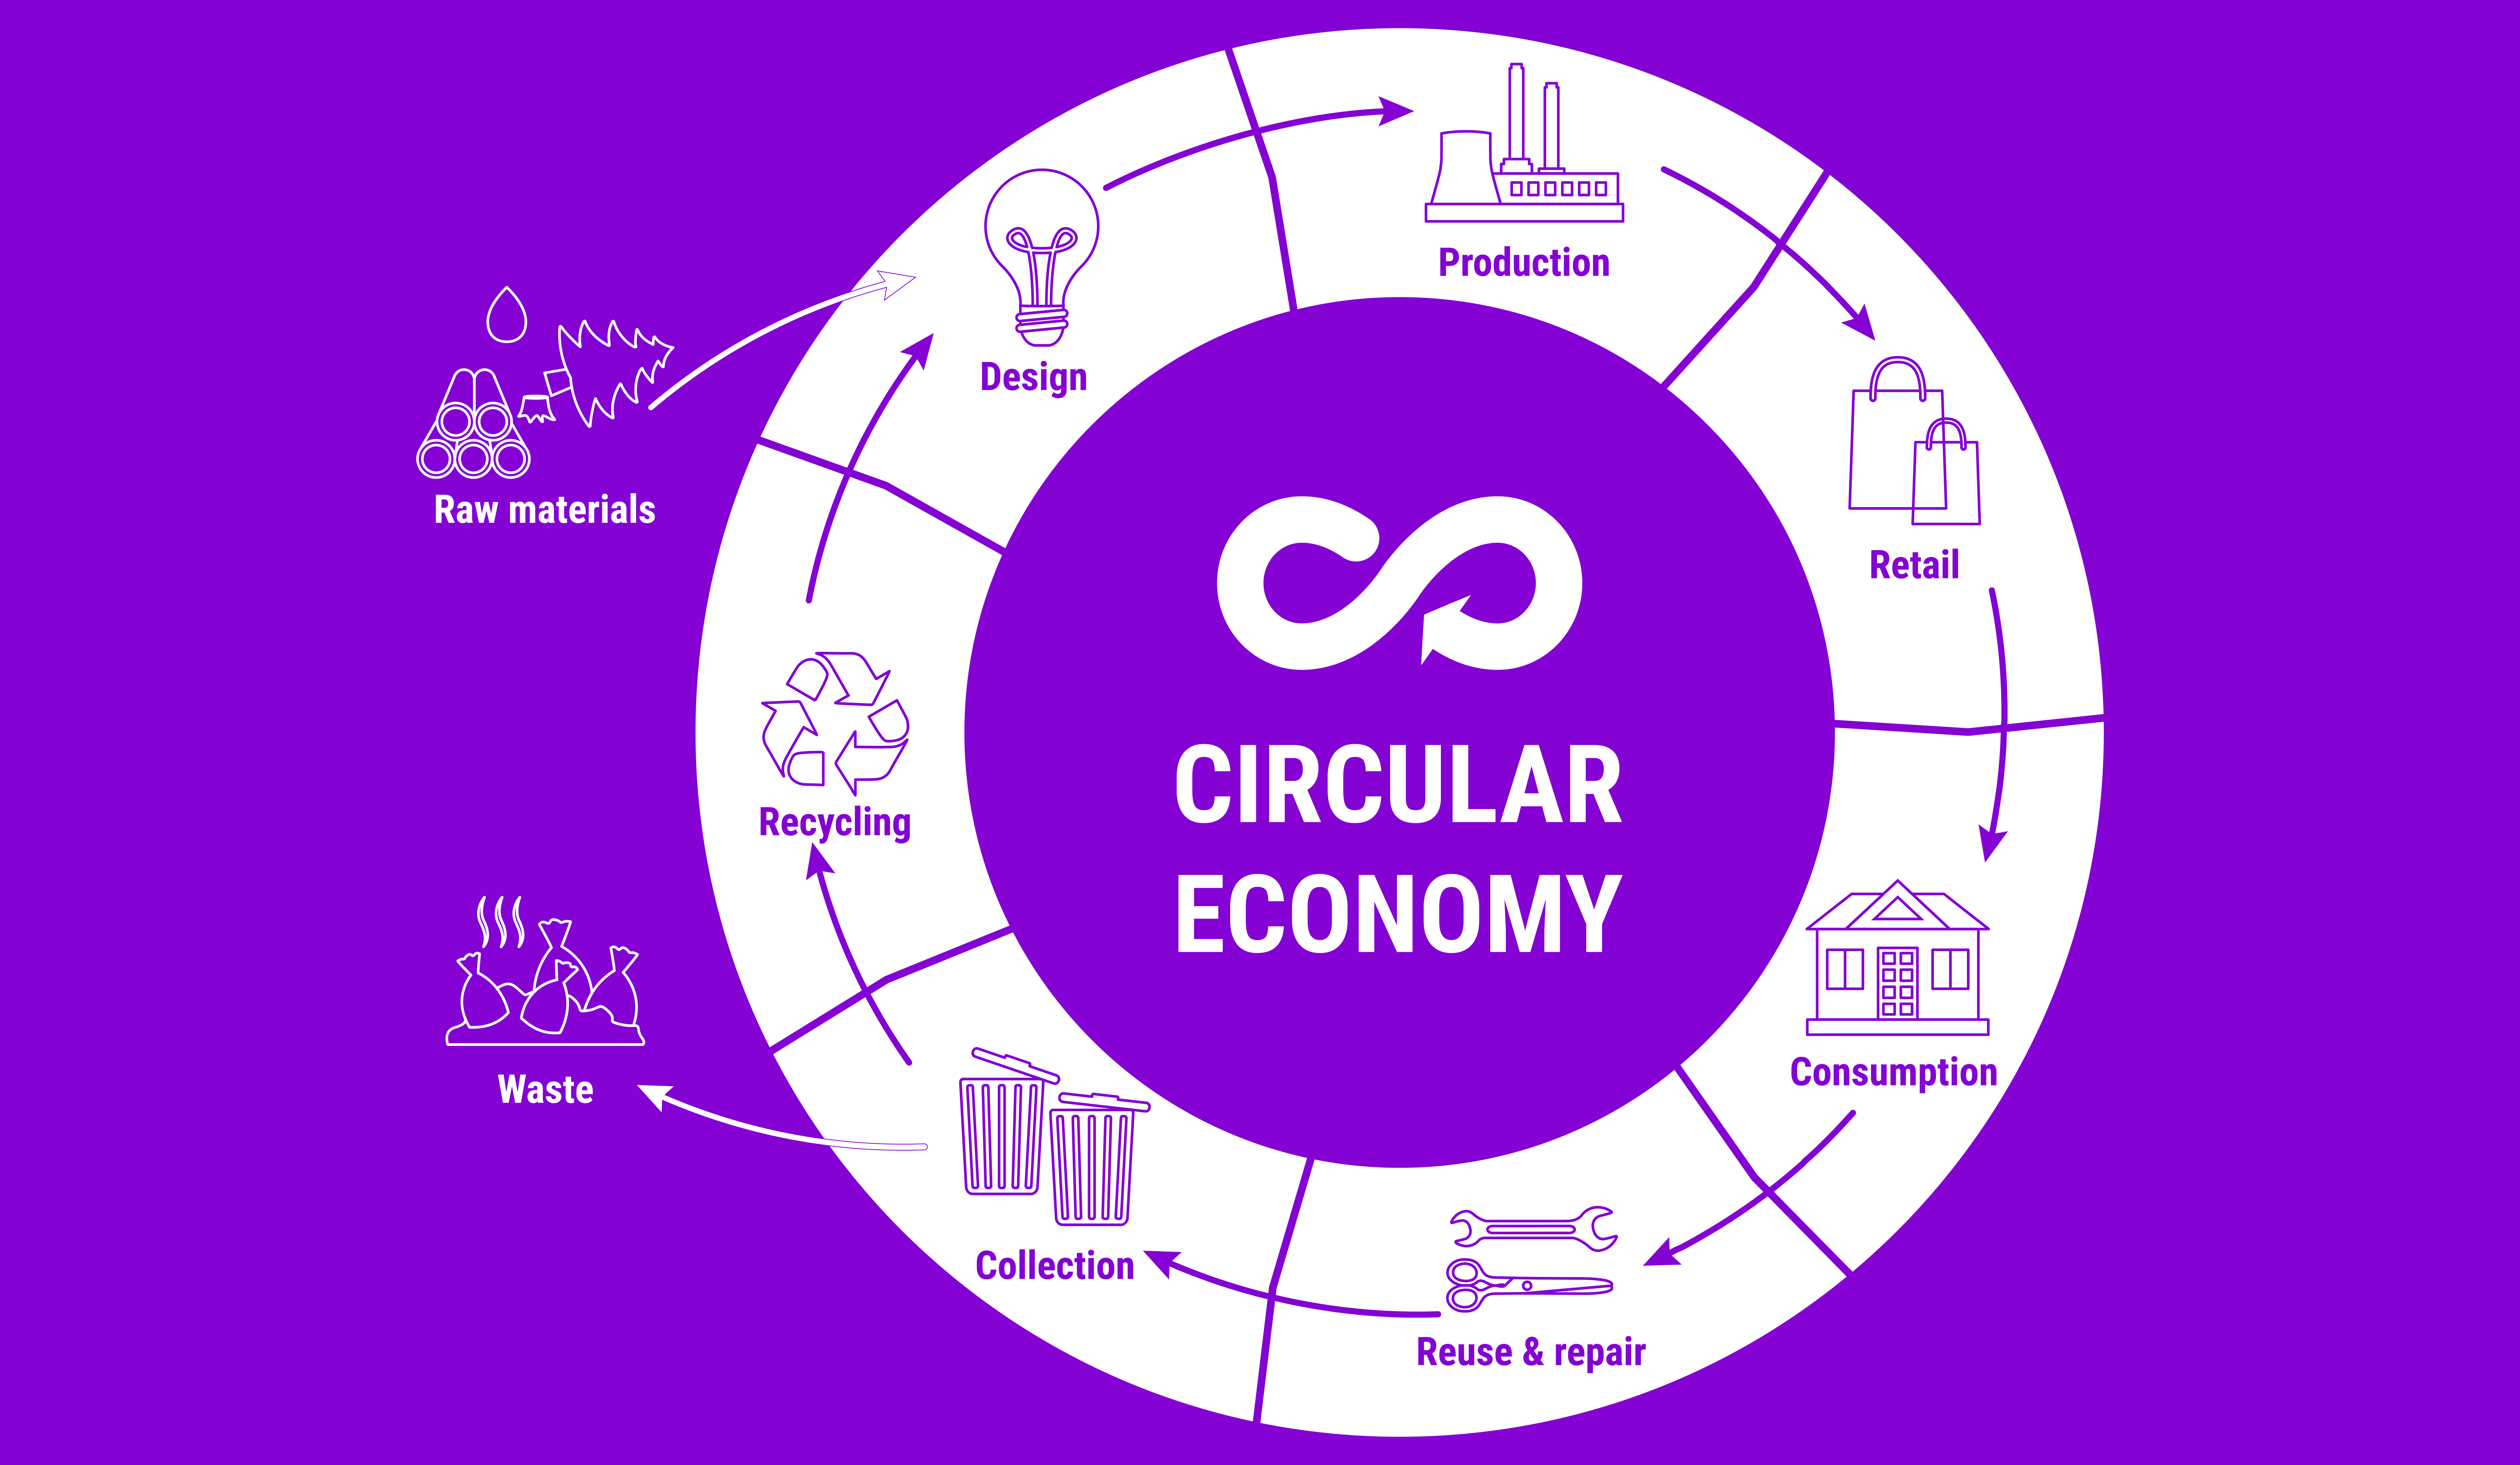 Business benefits of circular economy practices